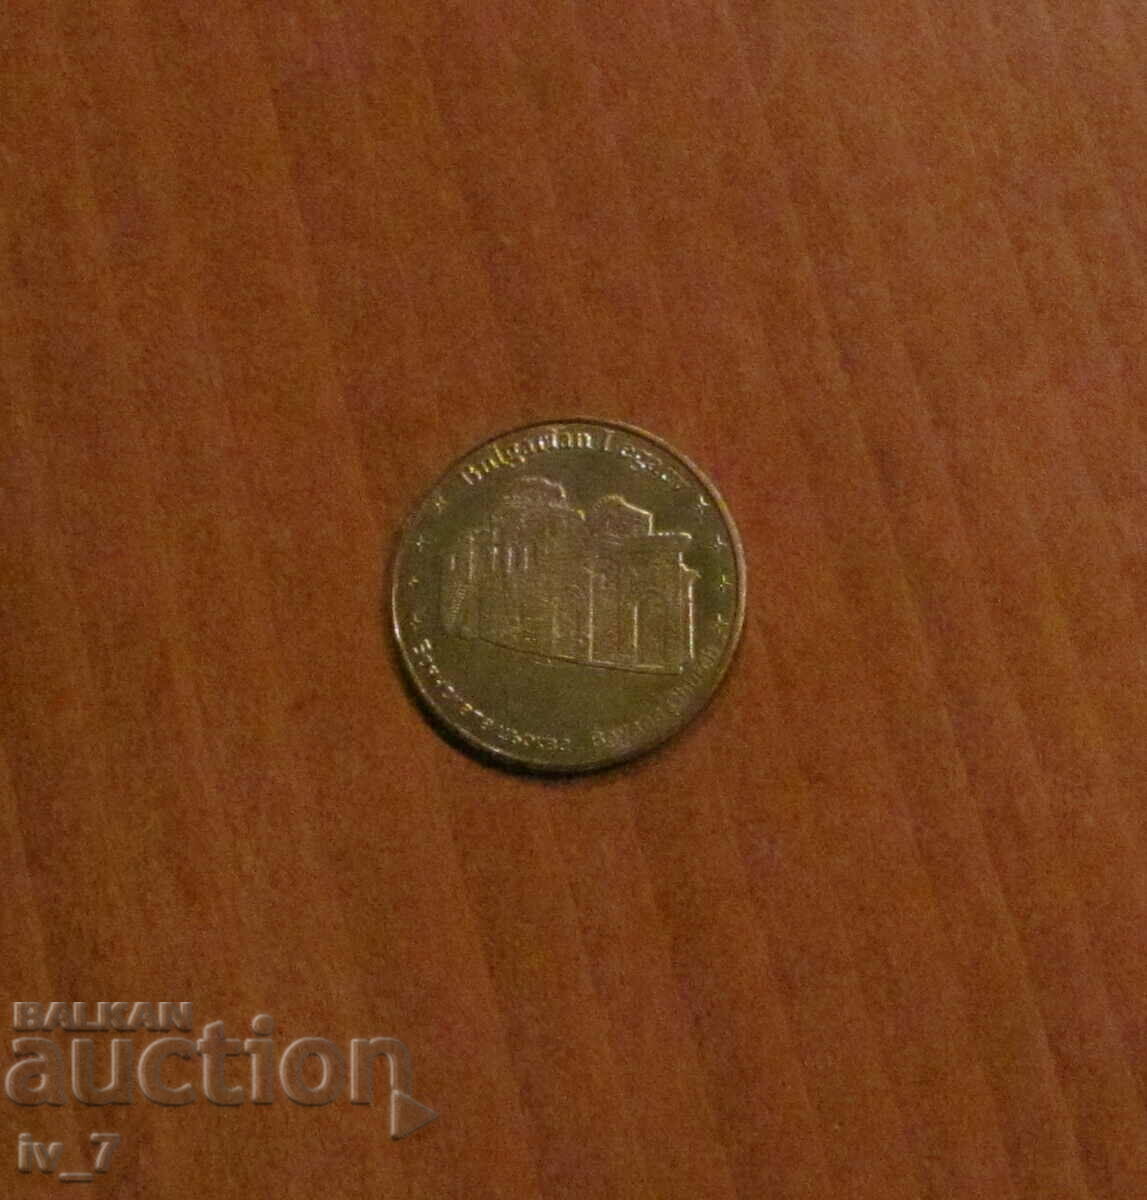 Souvenir coin from the "Bulgarian Heritage" series - Boyan Church